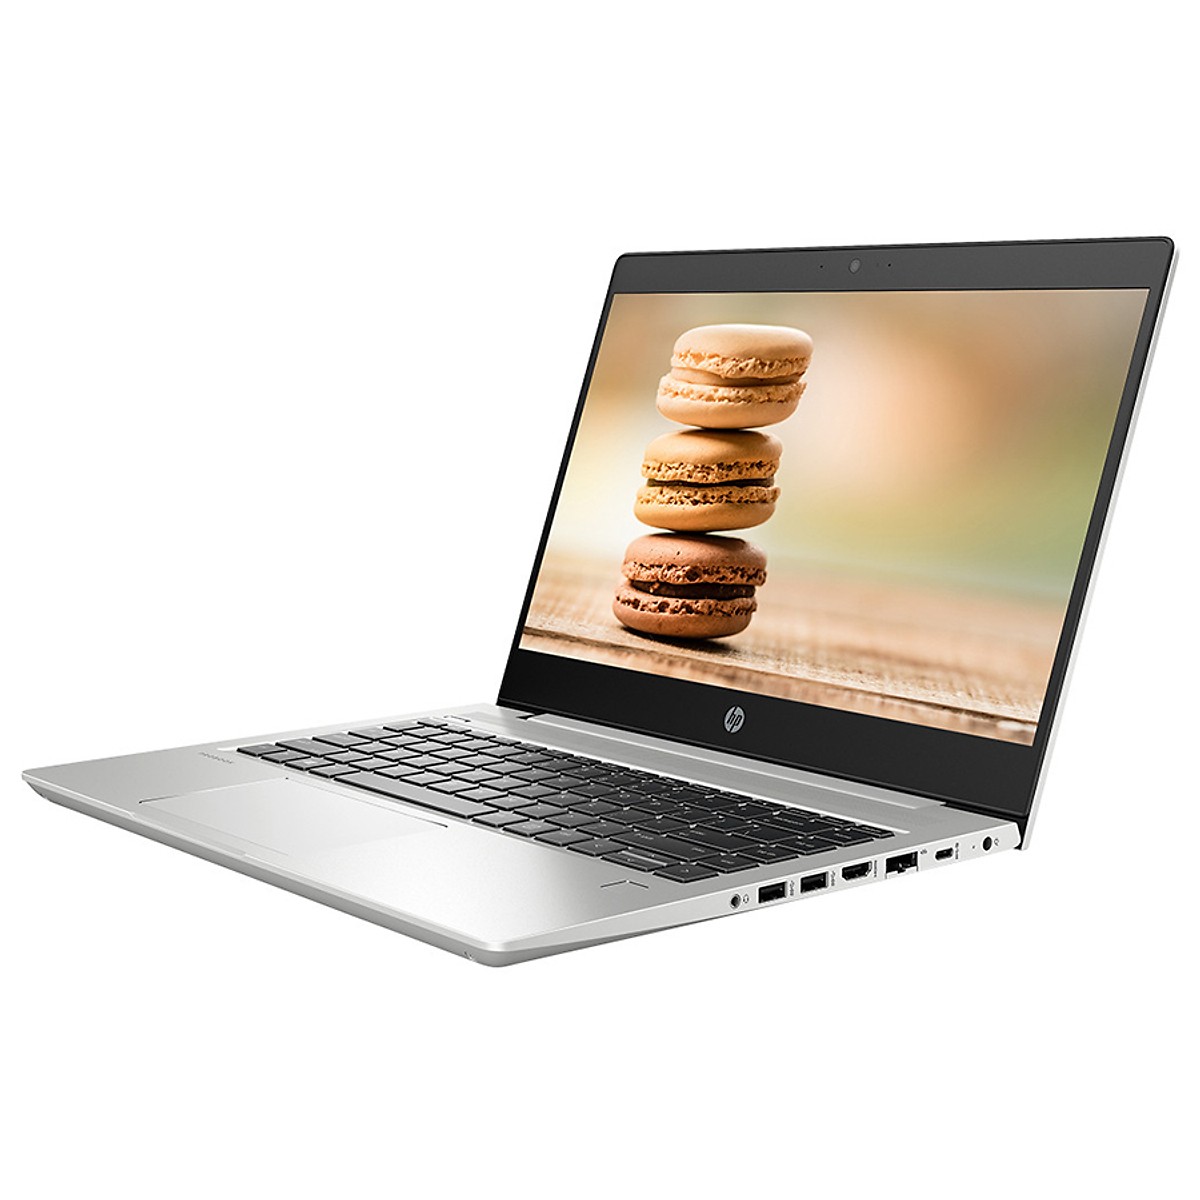 Laptop HP ProBook 440 G6 5YM63PA Core i3 8145U 2.10Ghz-4Mb/4Gb/500Gb HDD/14/VGA ON/ Dos/Silver)